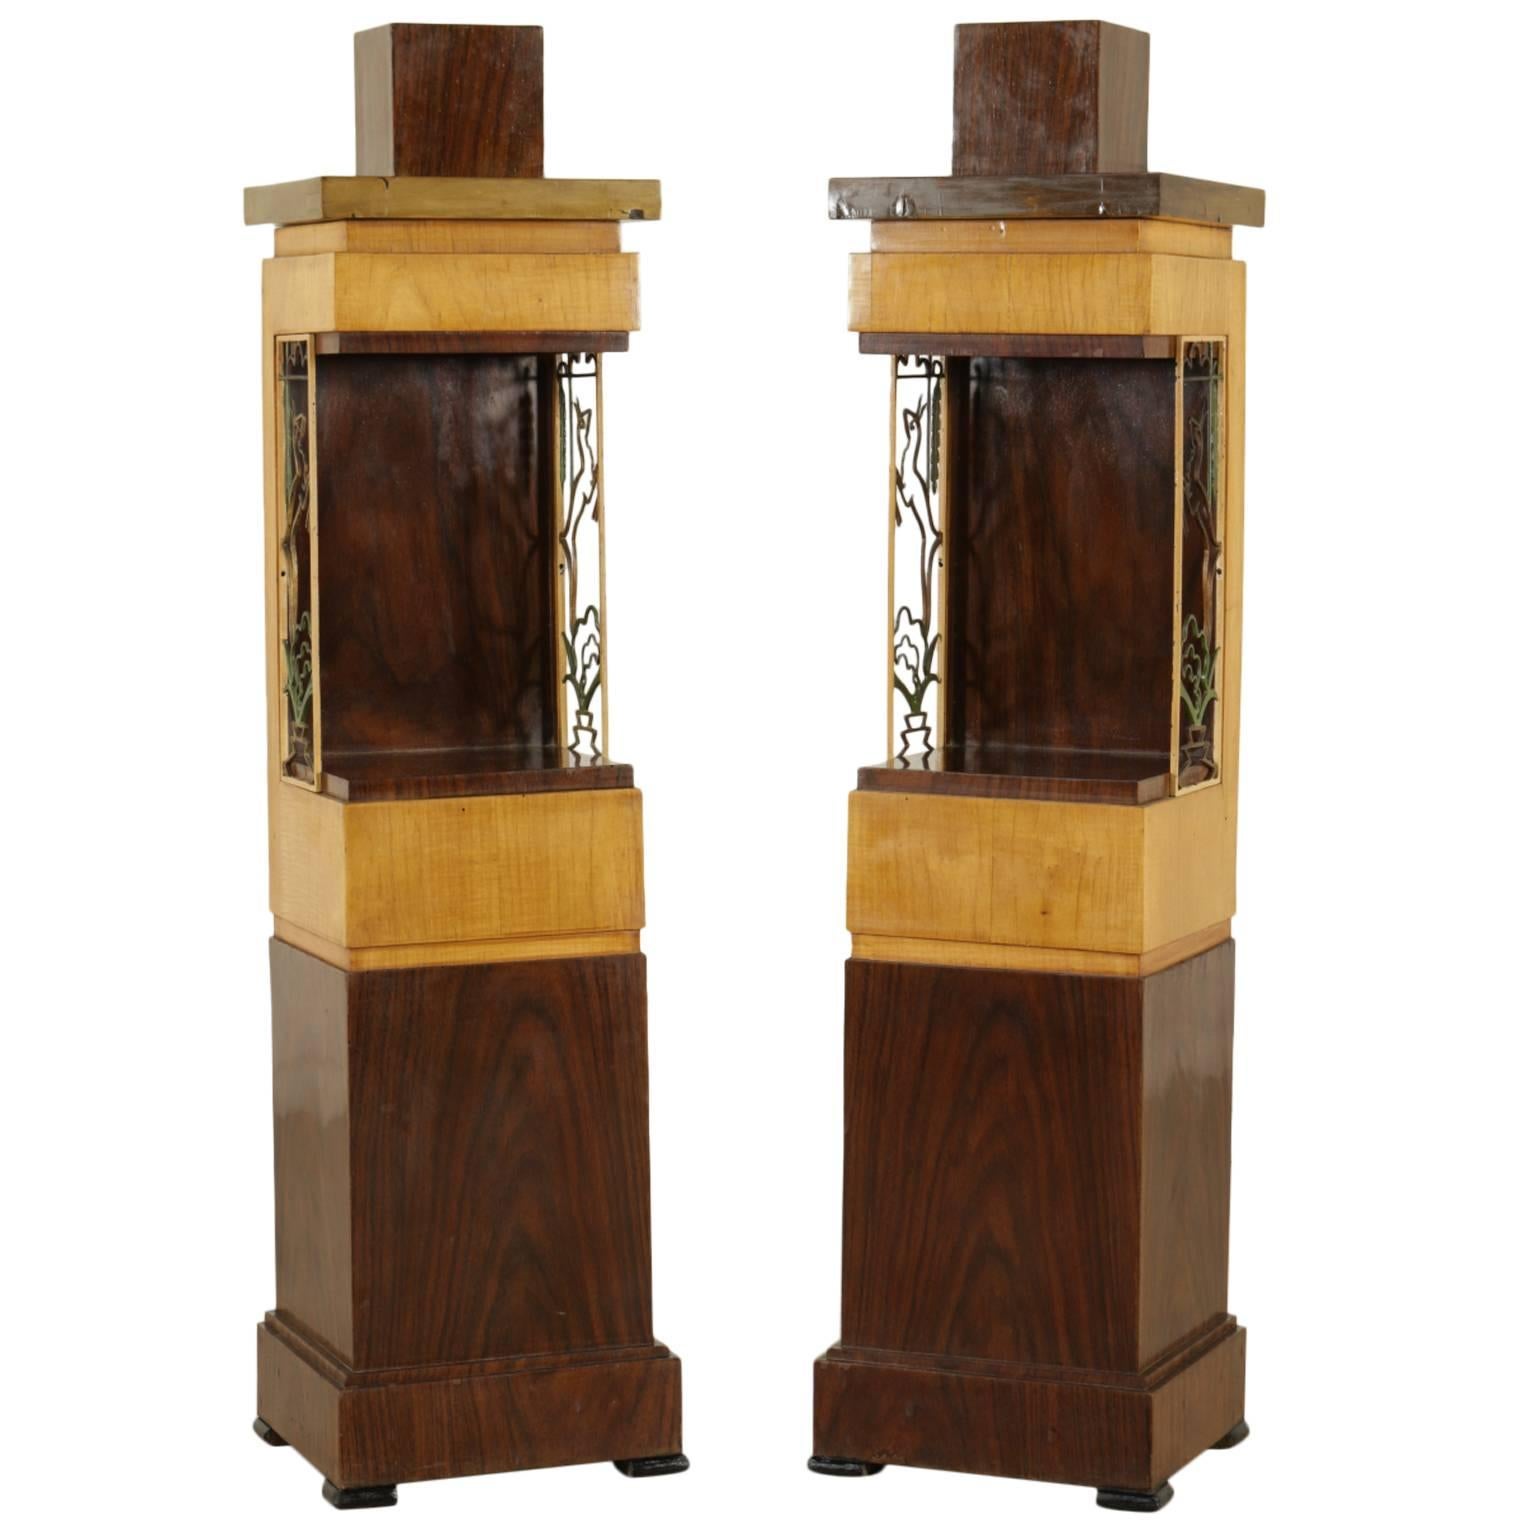 Pair of Display Columns Rosewood and Maple Veneer Iron Vintage, Italy, 1930s